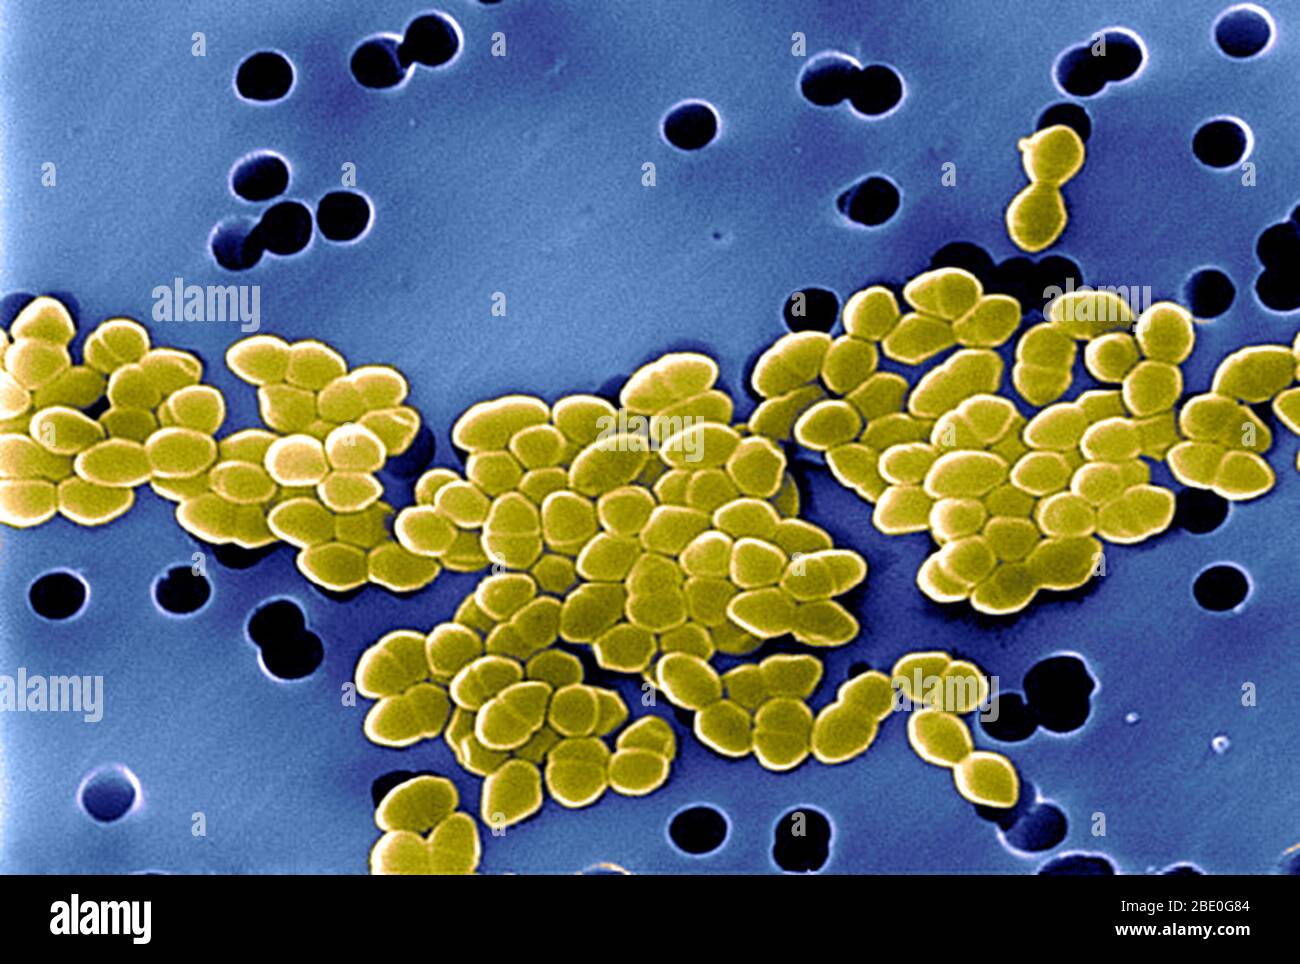 Vancomycin resistant enterococcus hi-res stock photography and images -  Alamy